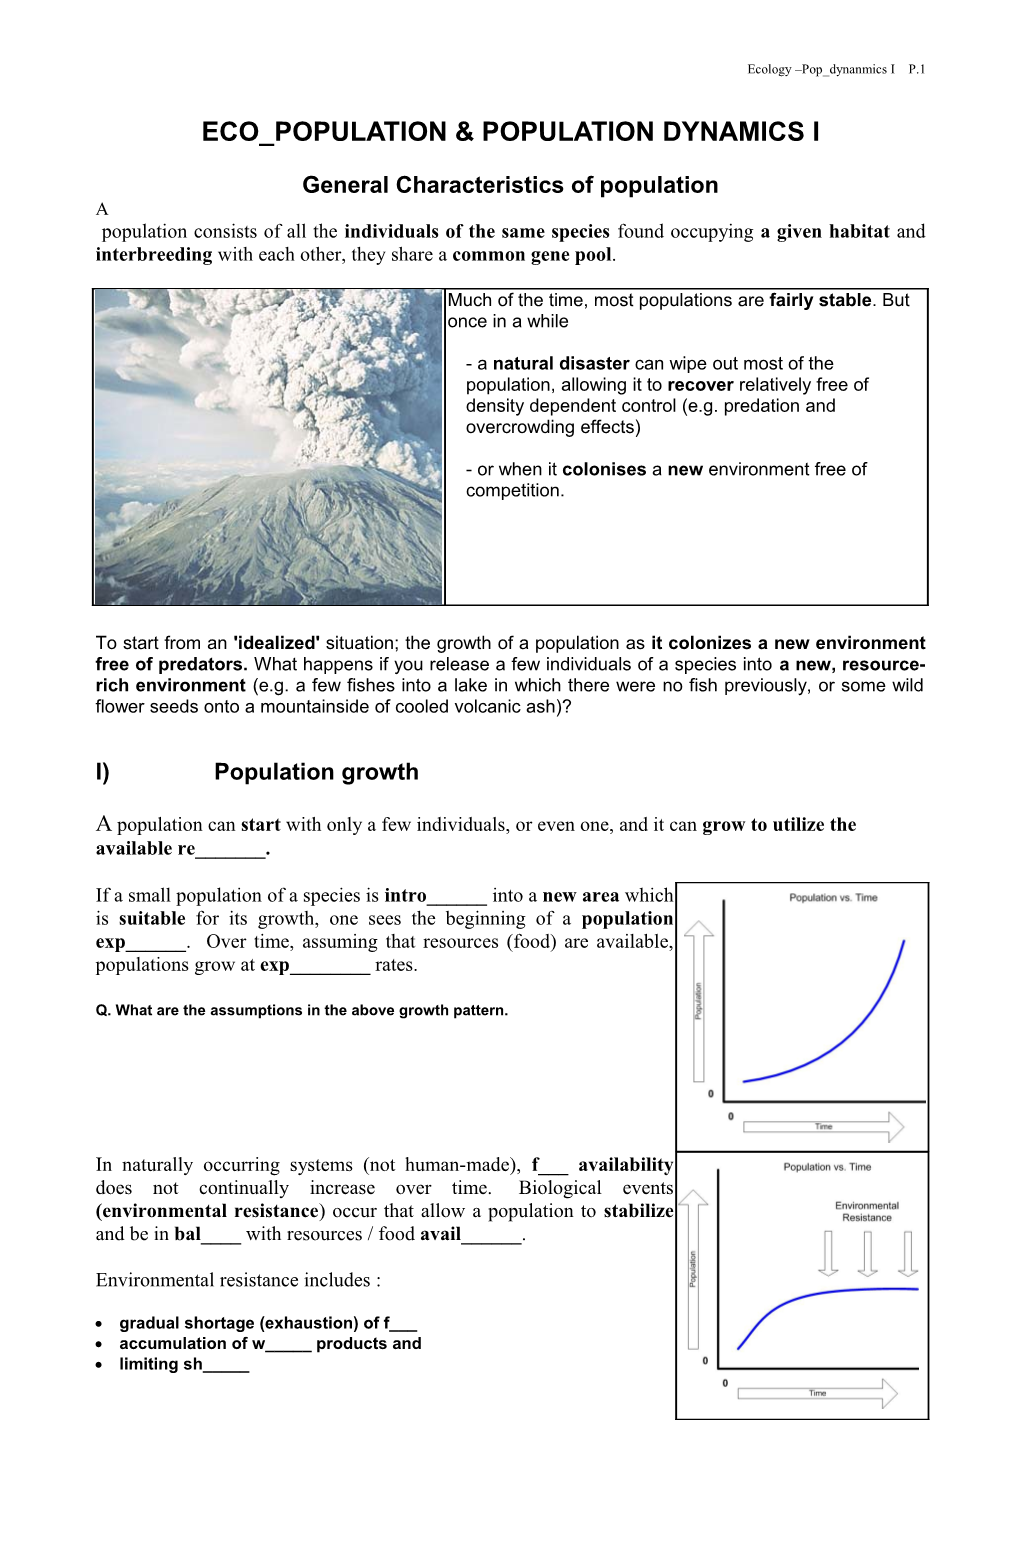 Ecology Population & Population Dynamics I